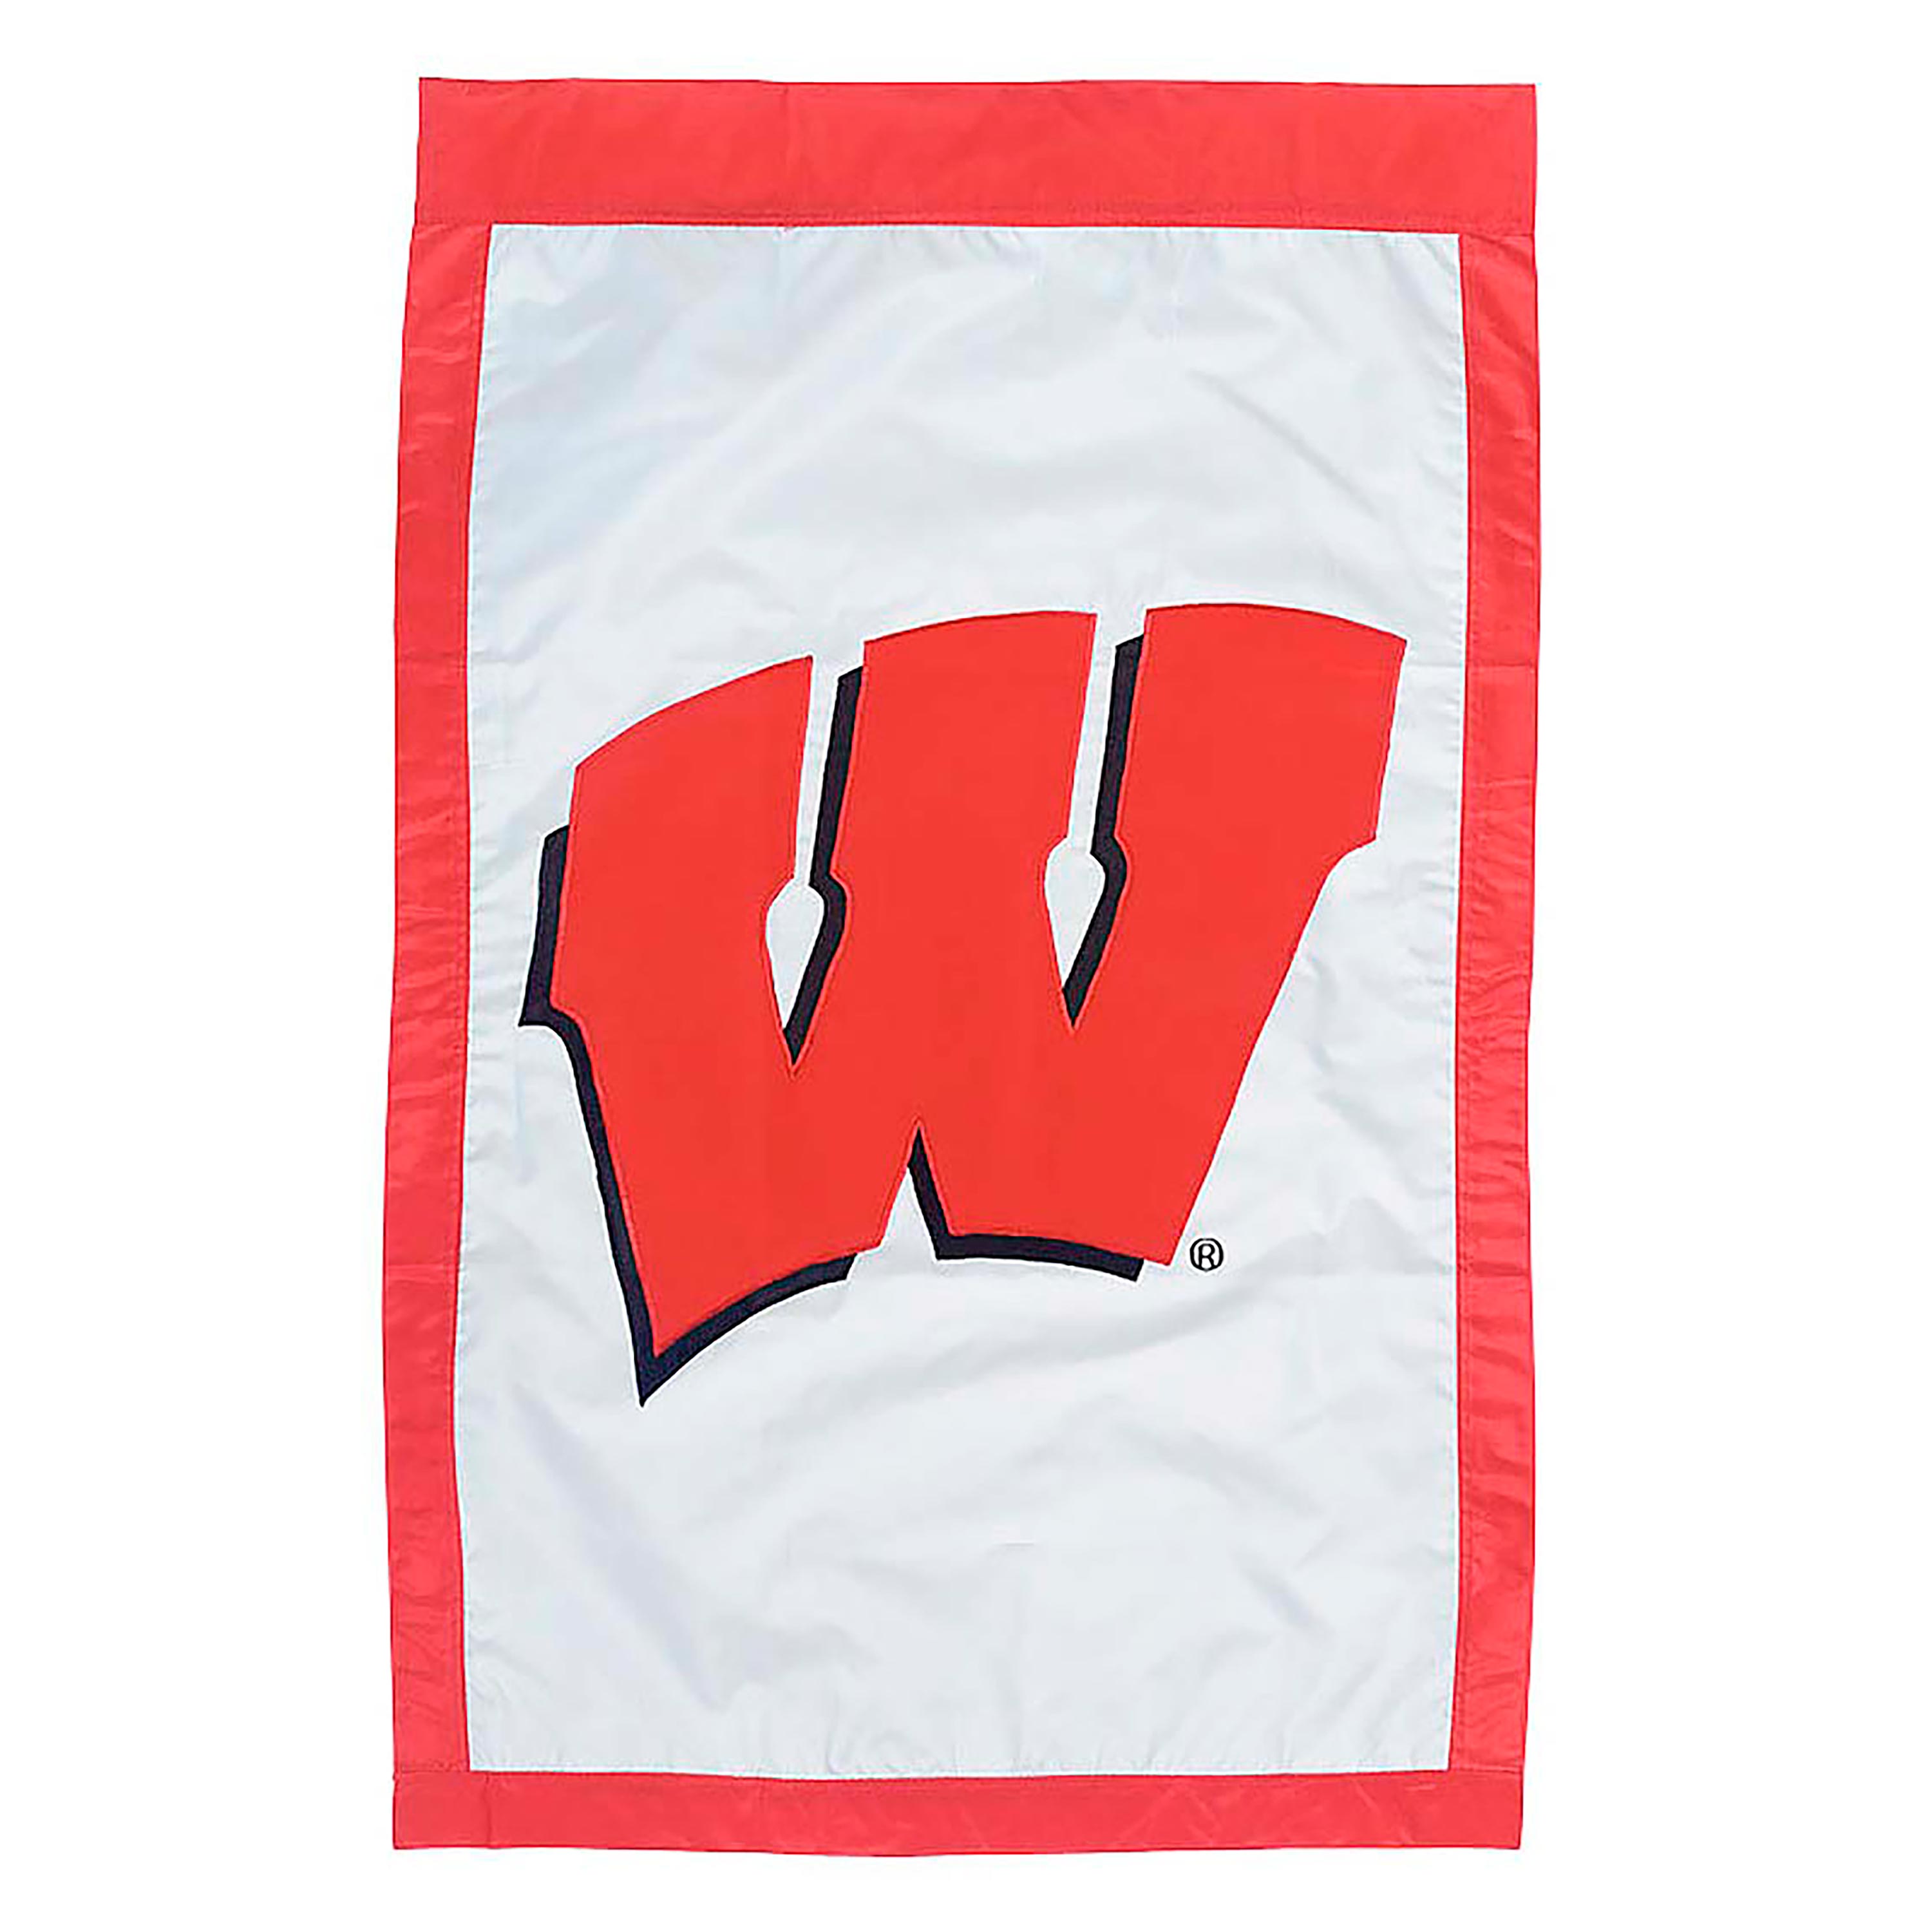 Univ of Wisconsin-Madison